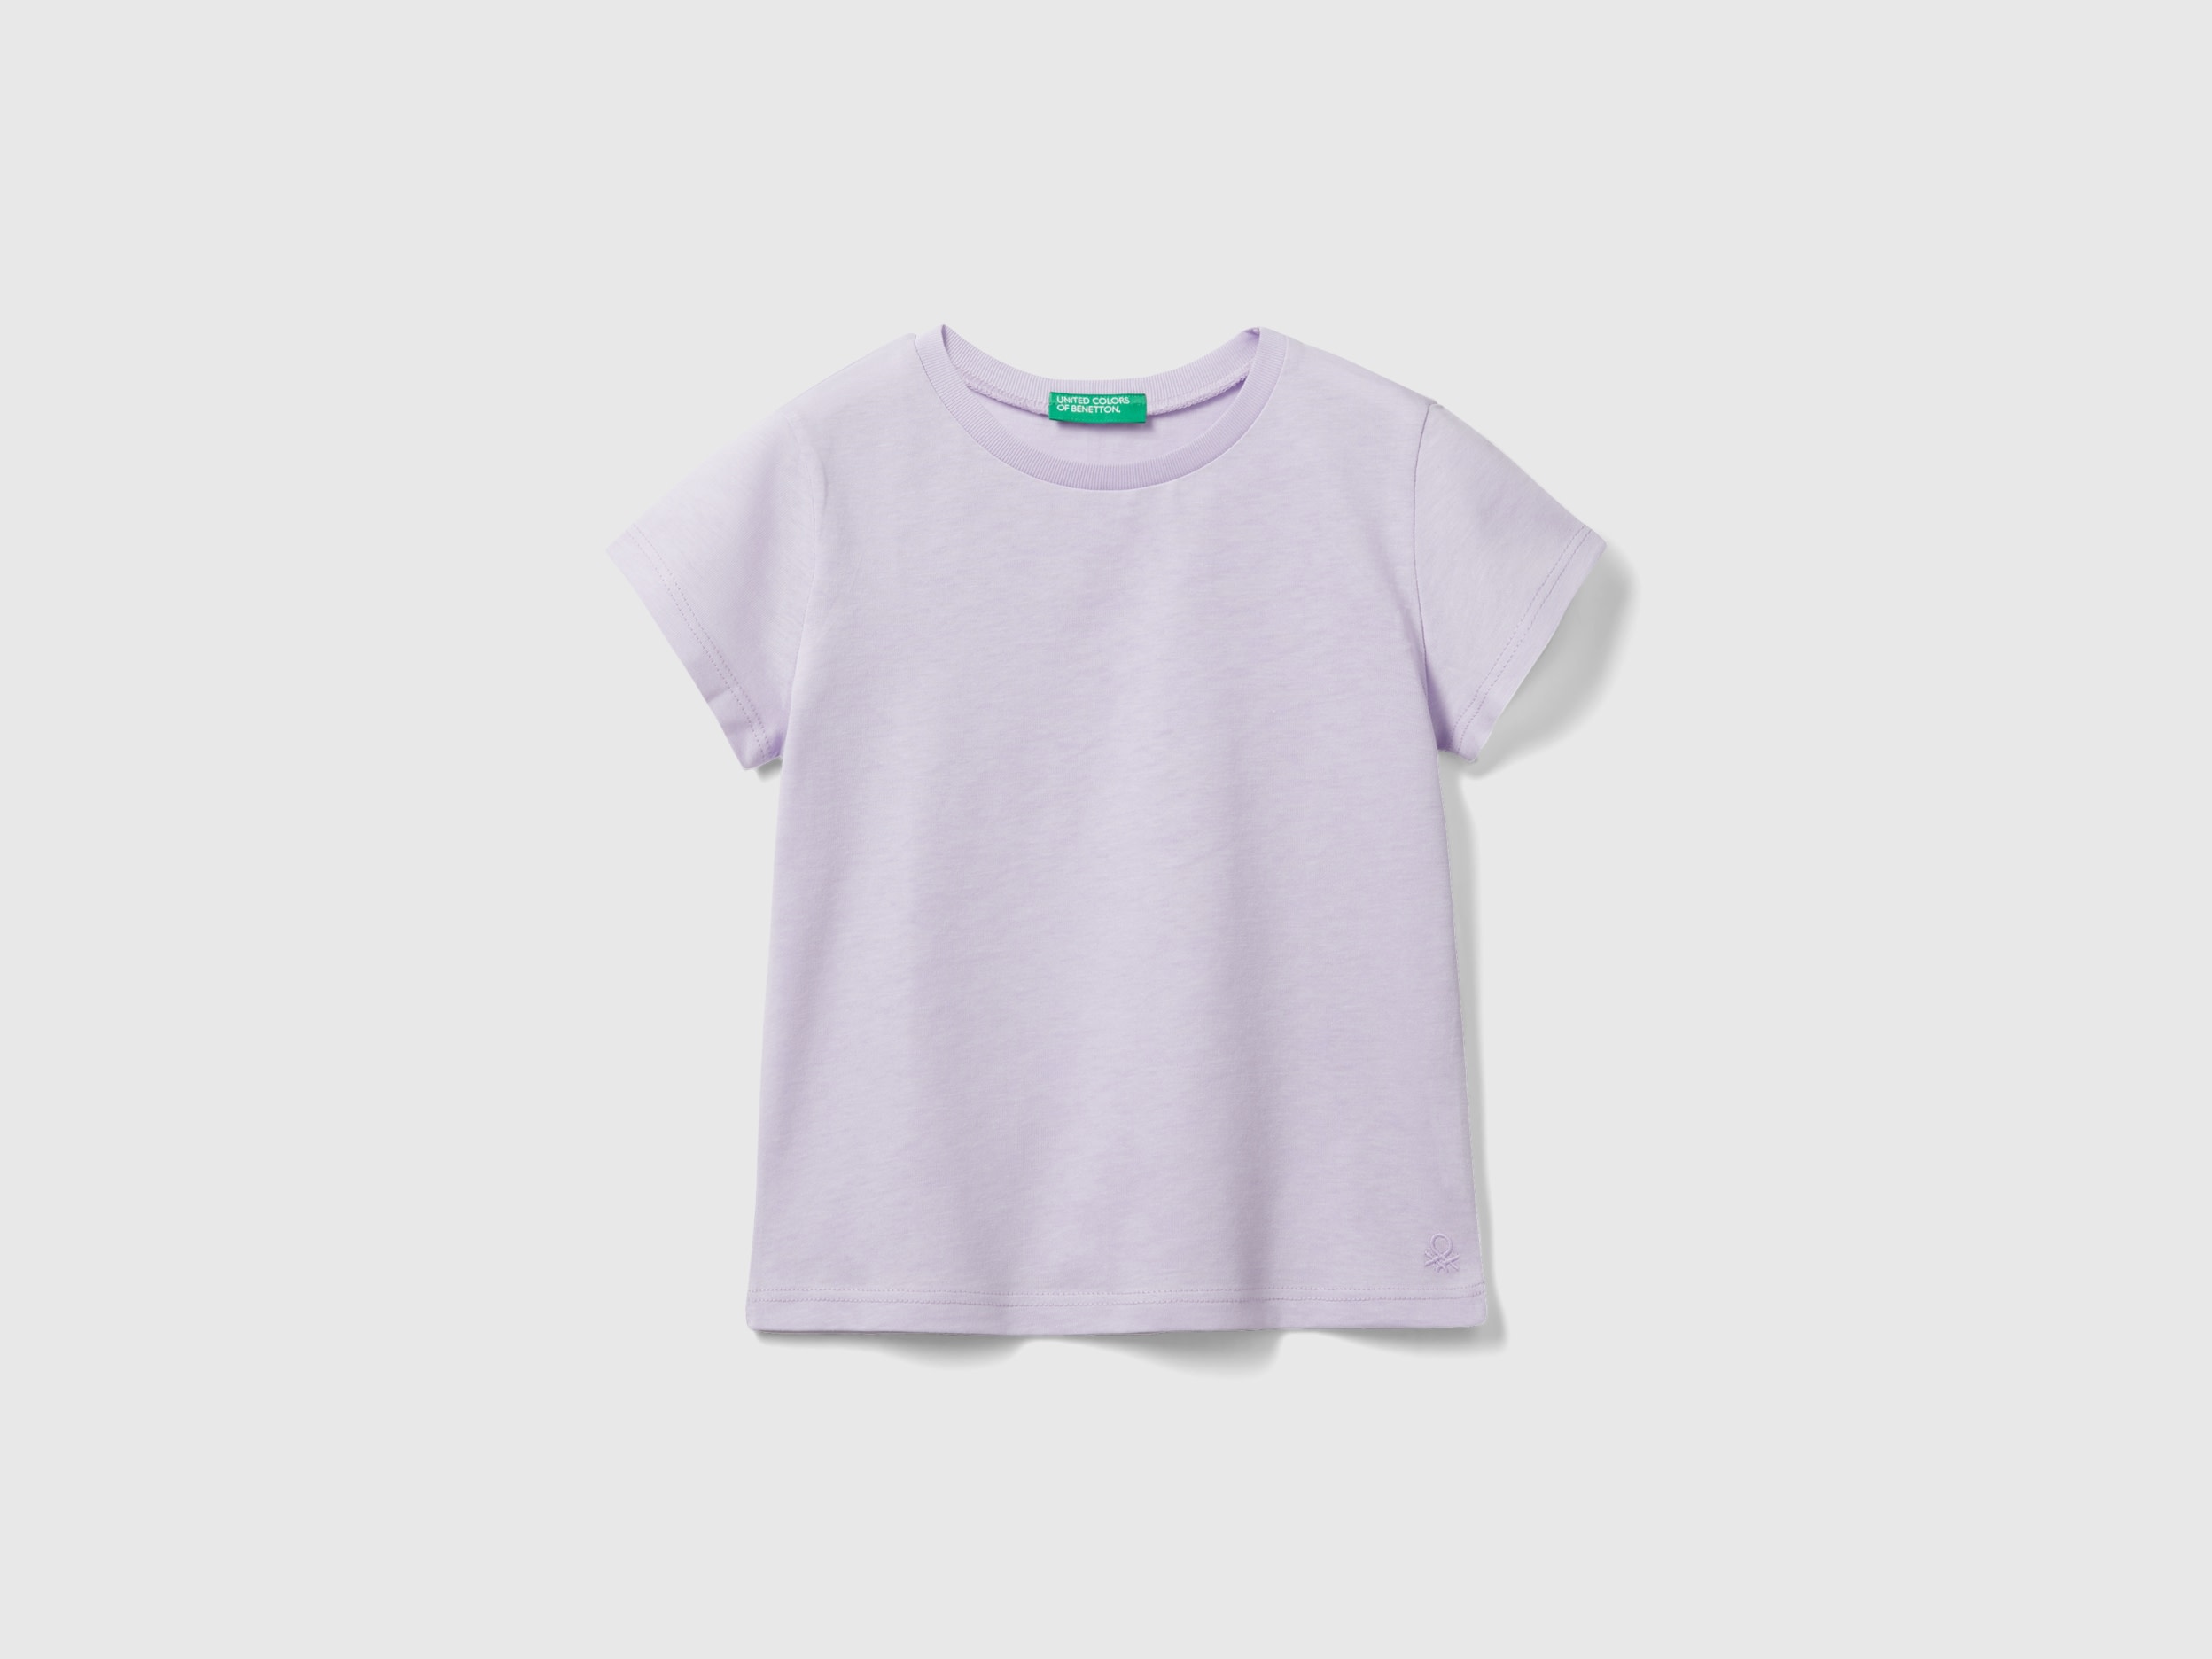 Image of Benetton, 100% Organic Cotton T-shirt, size 82, Lilac, Kids